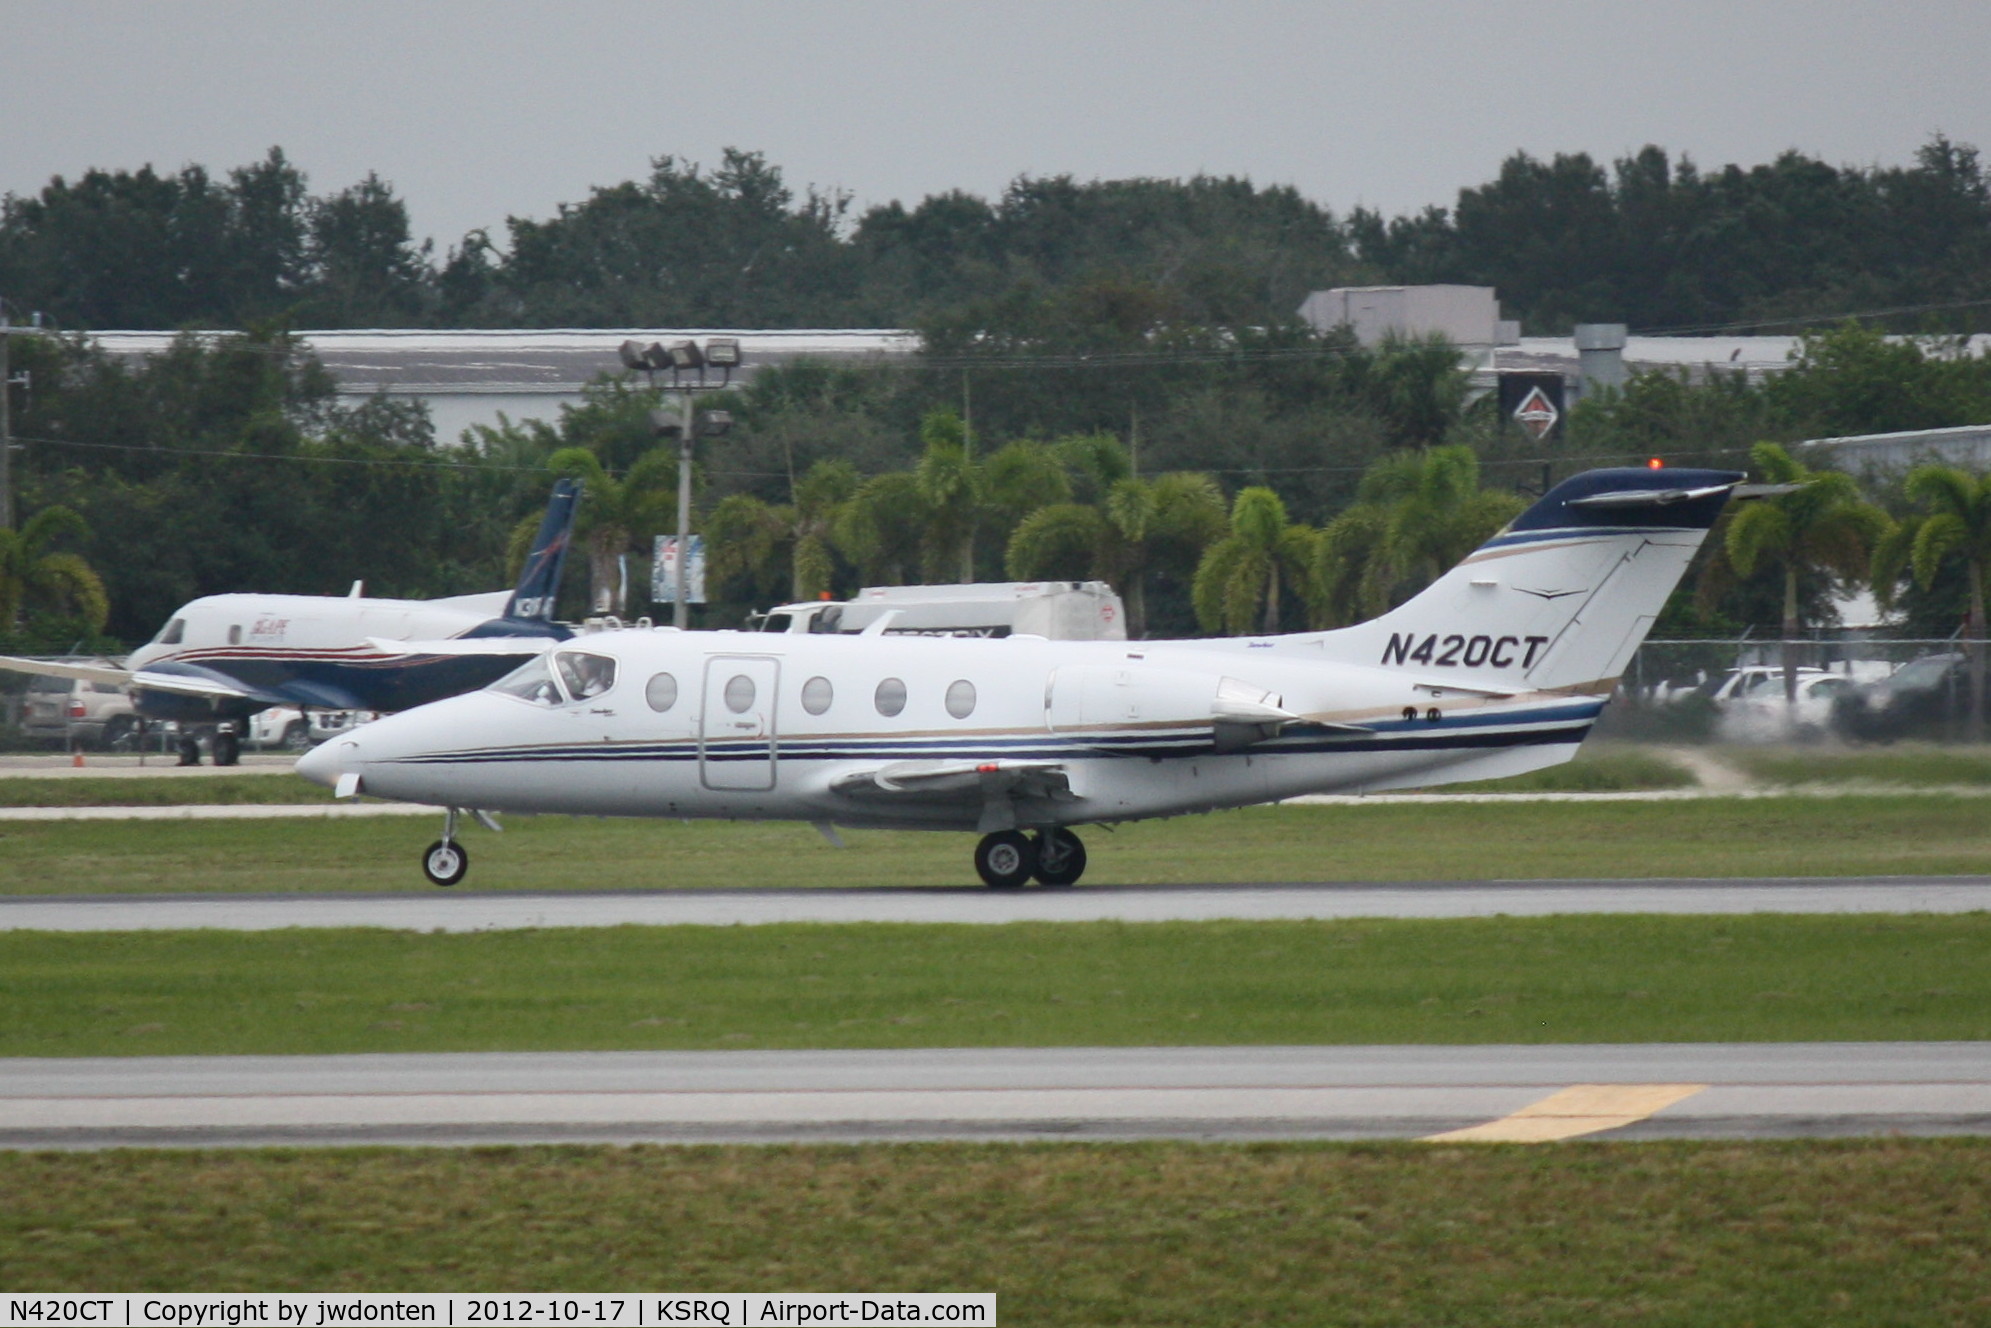 N420CT, 2007 Raytheon Beechjet 400A C/N RK-517, Beechcraft Beechjet (N420CT) departs Sarasota-Bradenton International Airport enroute to Palm Beach International Airport